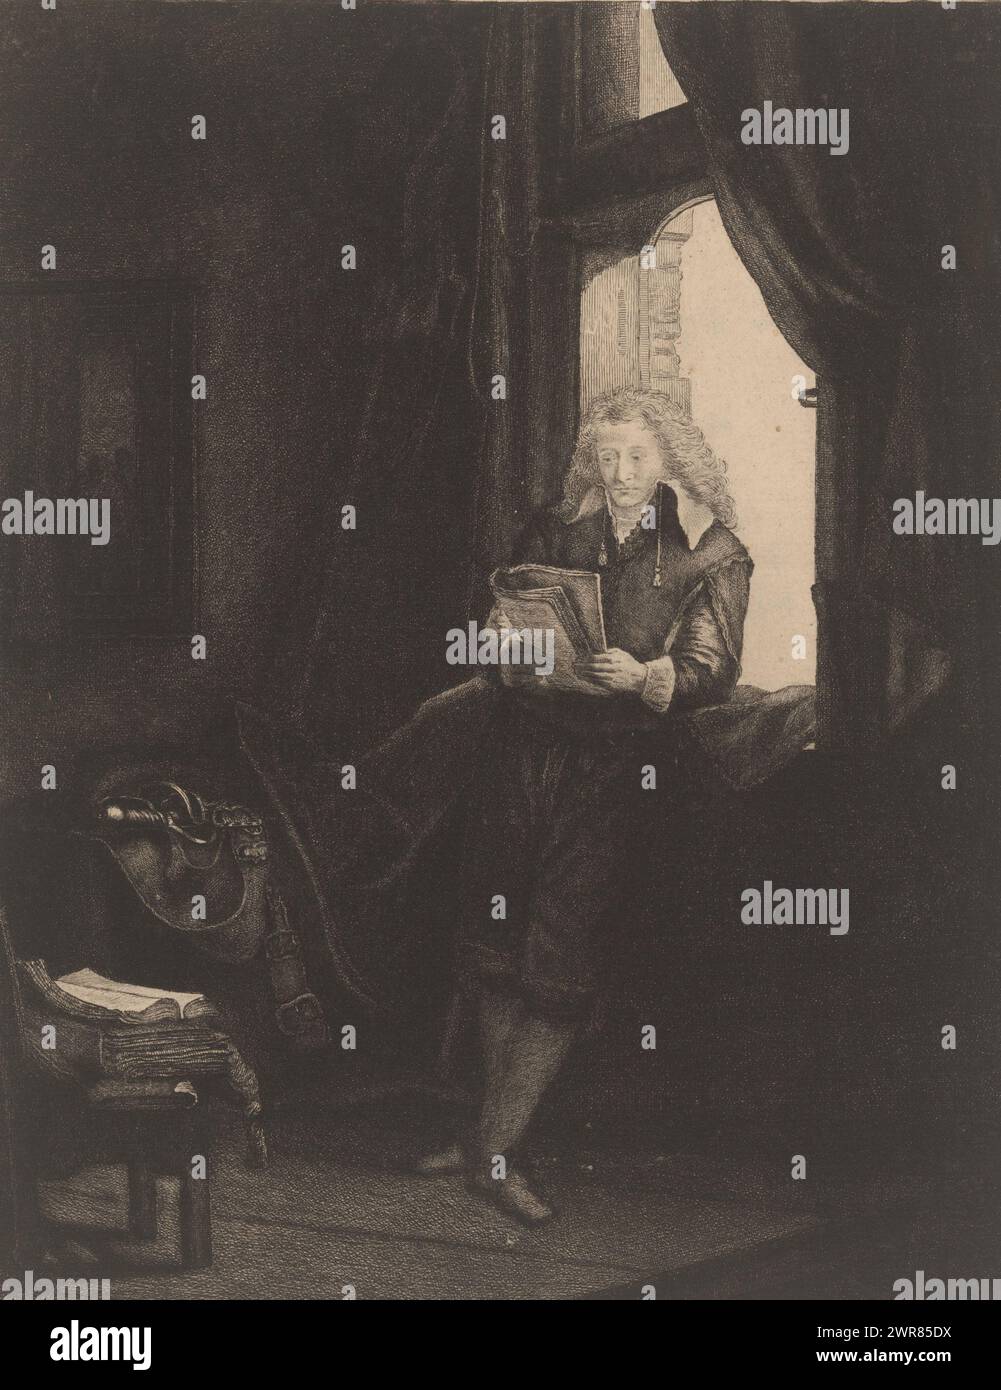 Jan Six, print maker: Pierre François Basan, after print by: Rembrandt van Rijn, 1733 - 1797, paper, etching, height 260 mm × width 197 mm, print Stock Photo